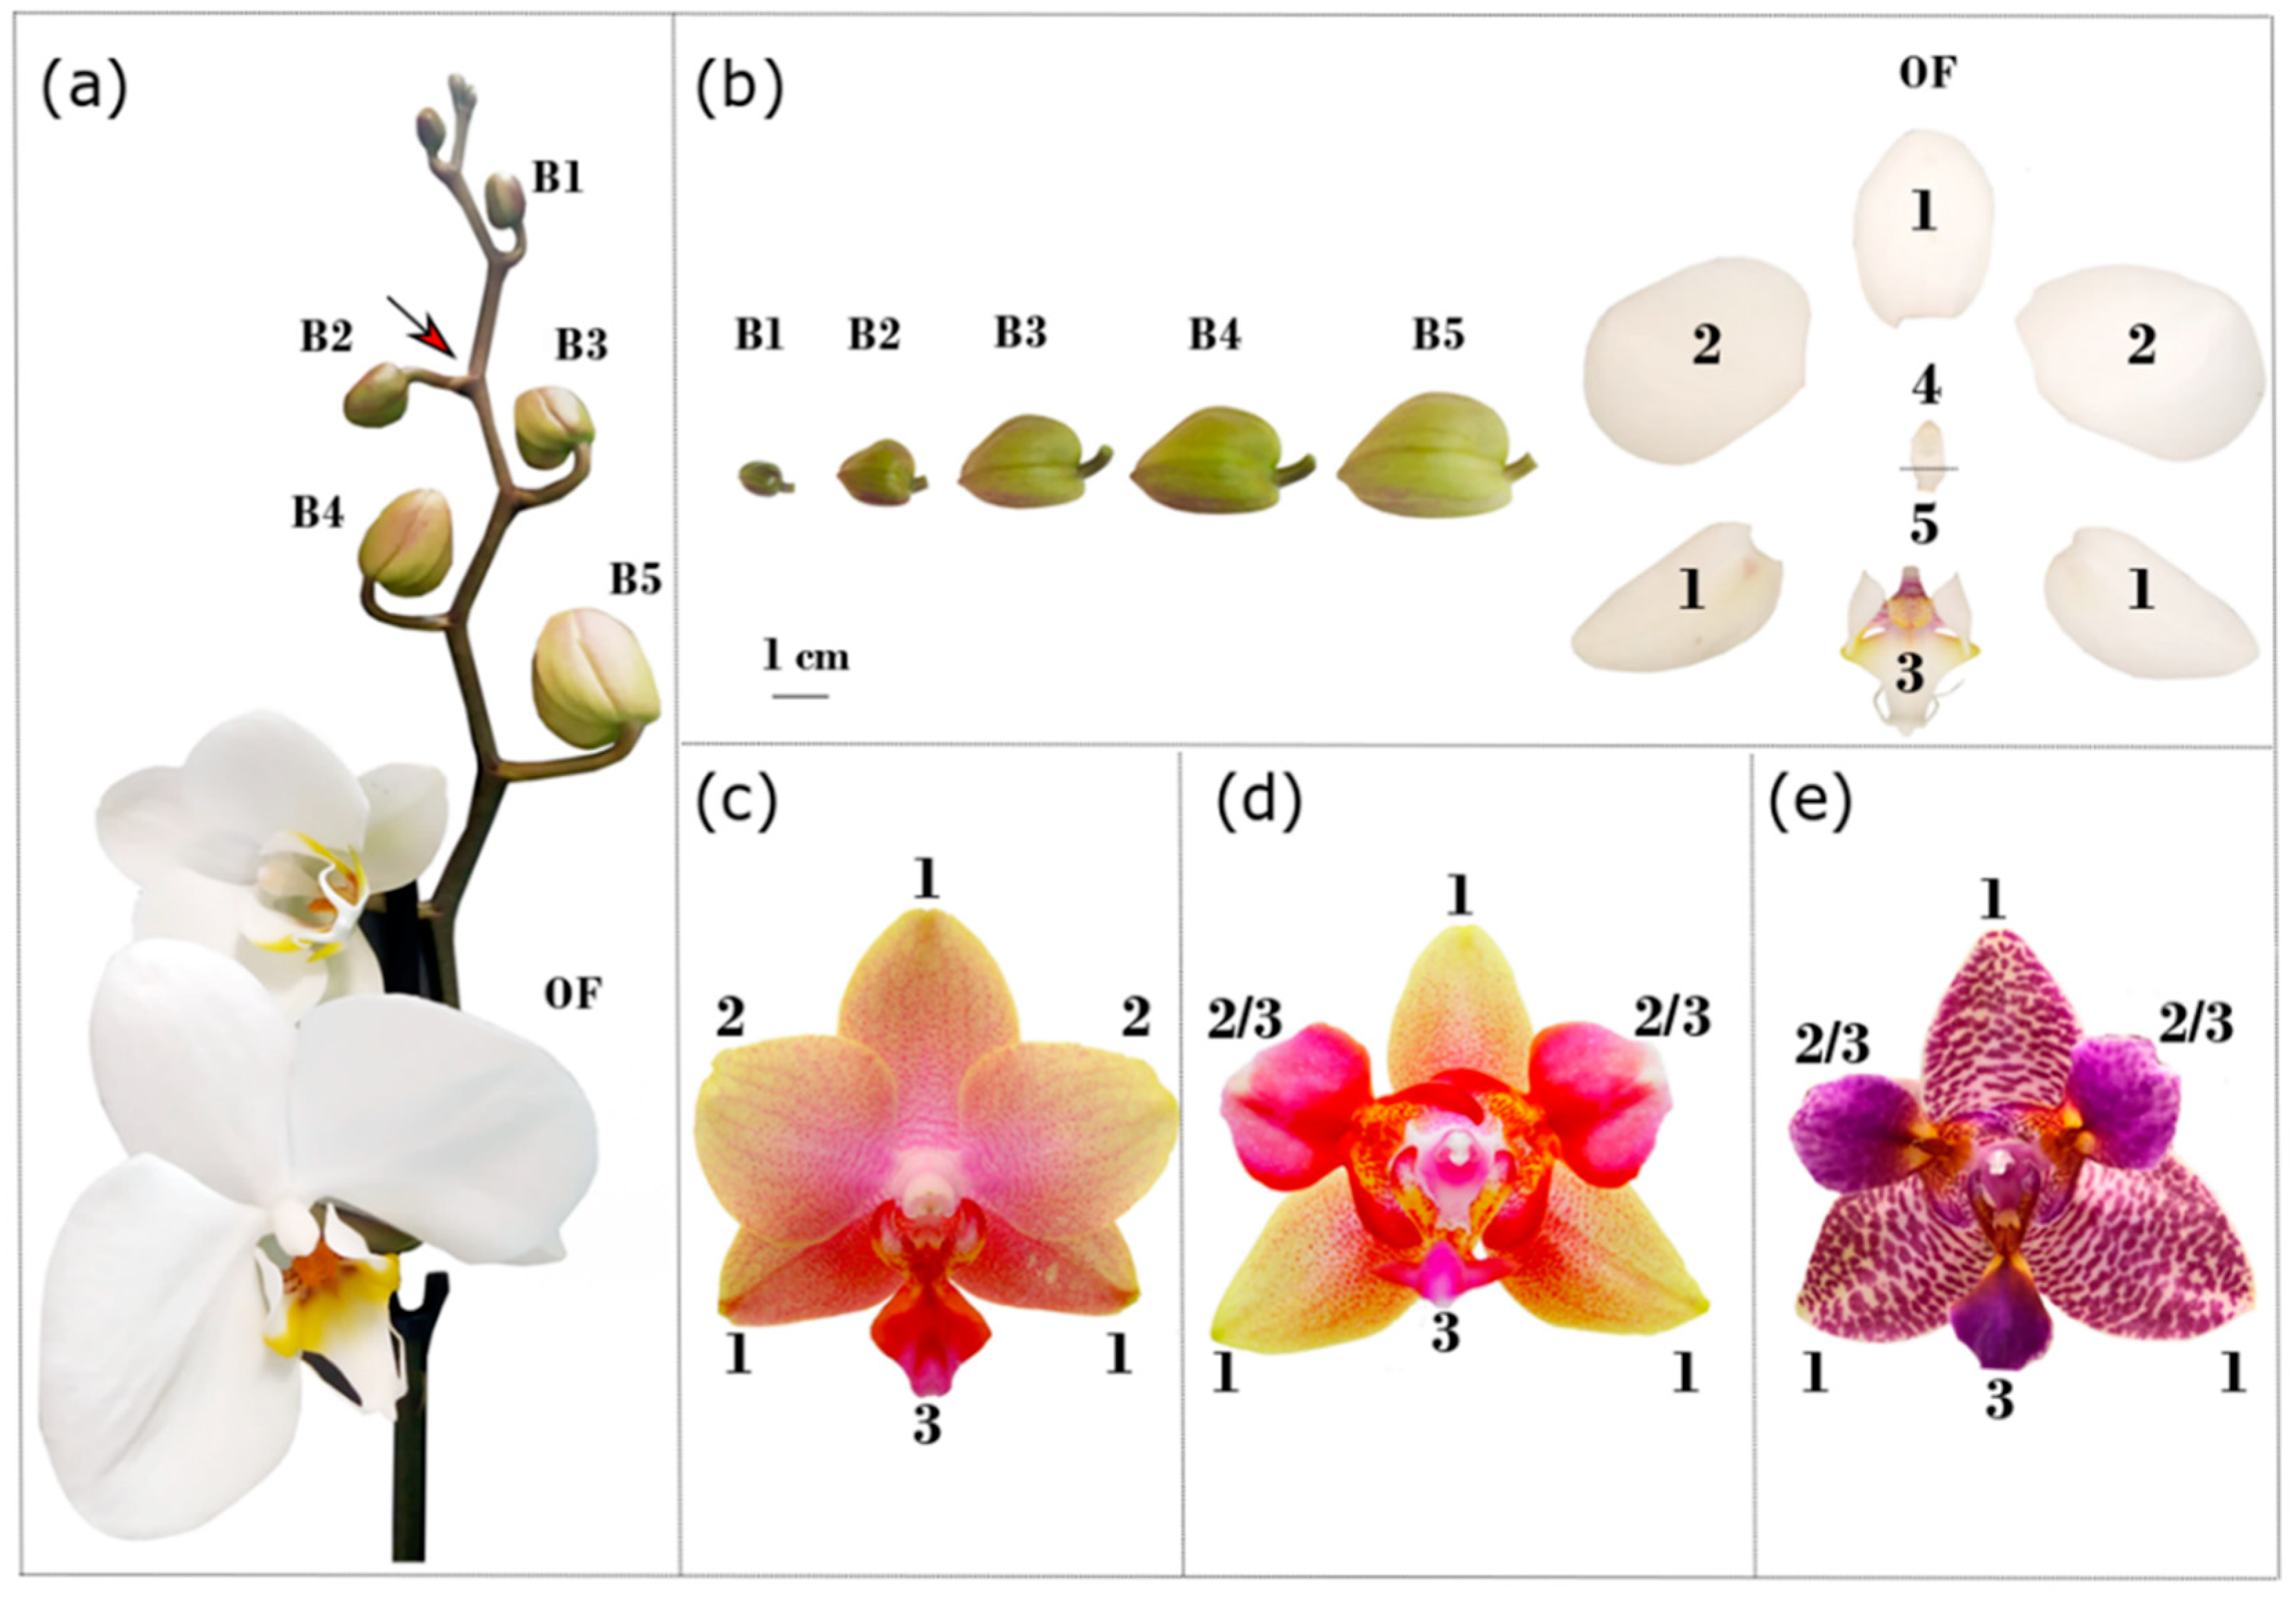 Primer on the 'Big 3' flowering plants